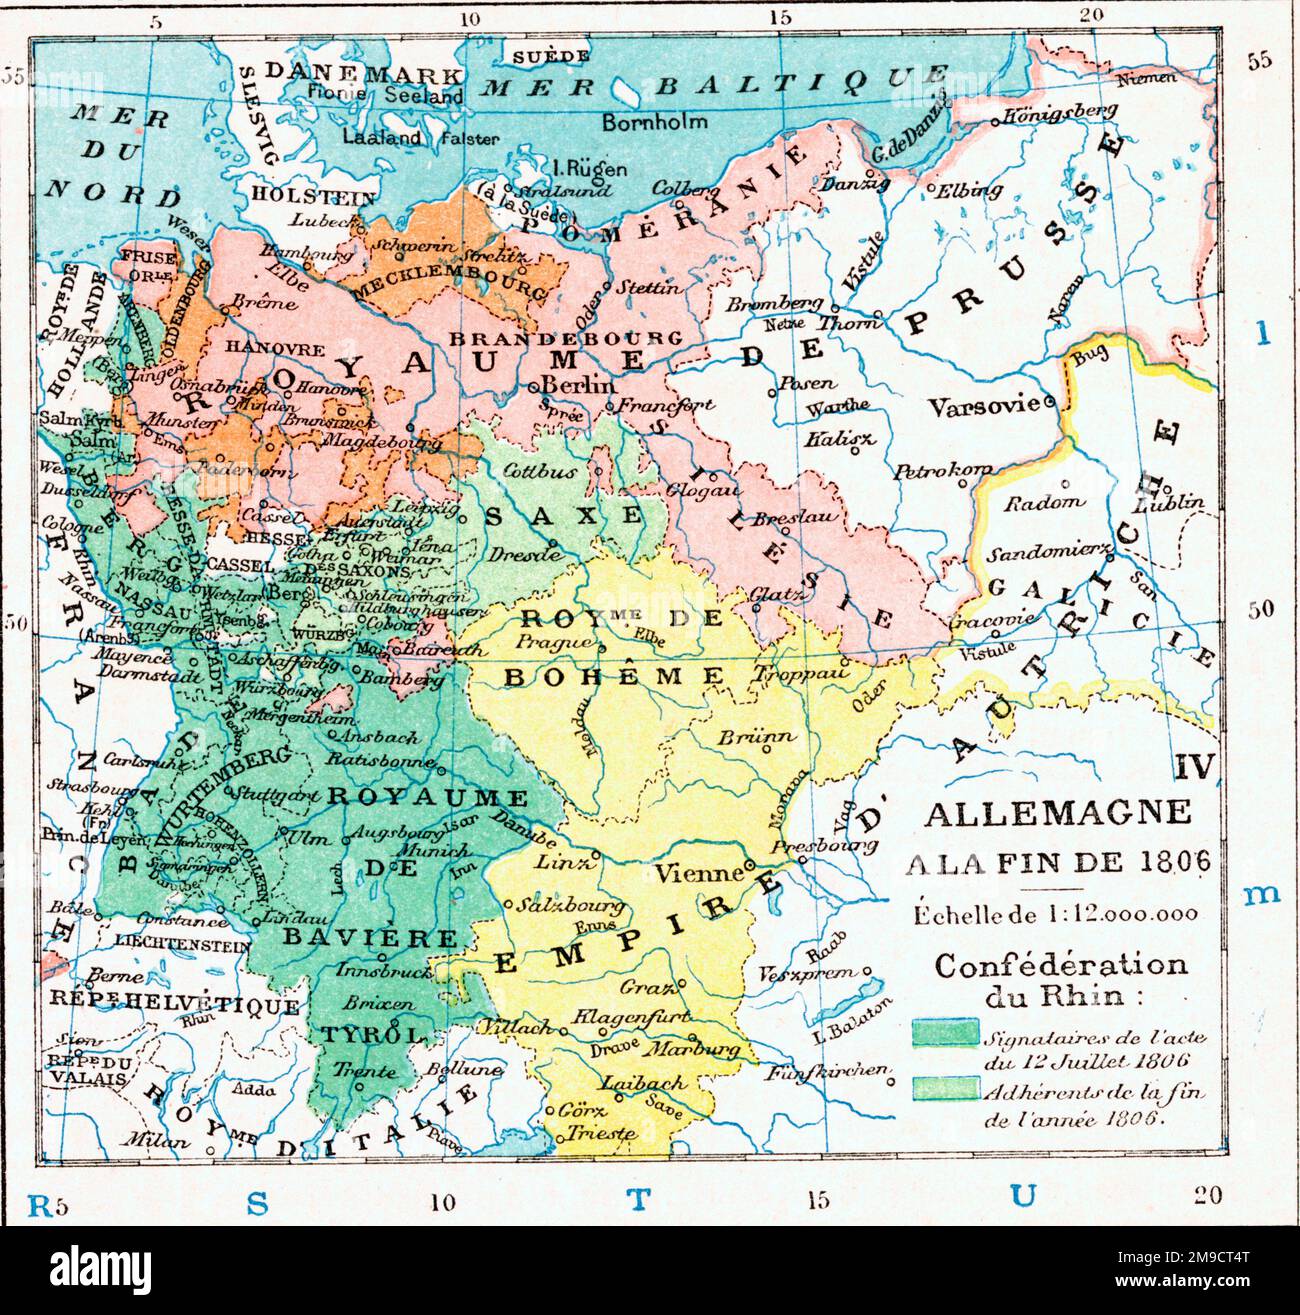 Allemagne A La Fin De 1806 - Mapa de Alemania a finales de 1806 Foto de stock